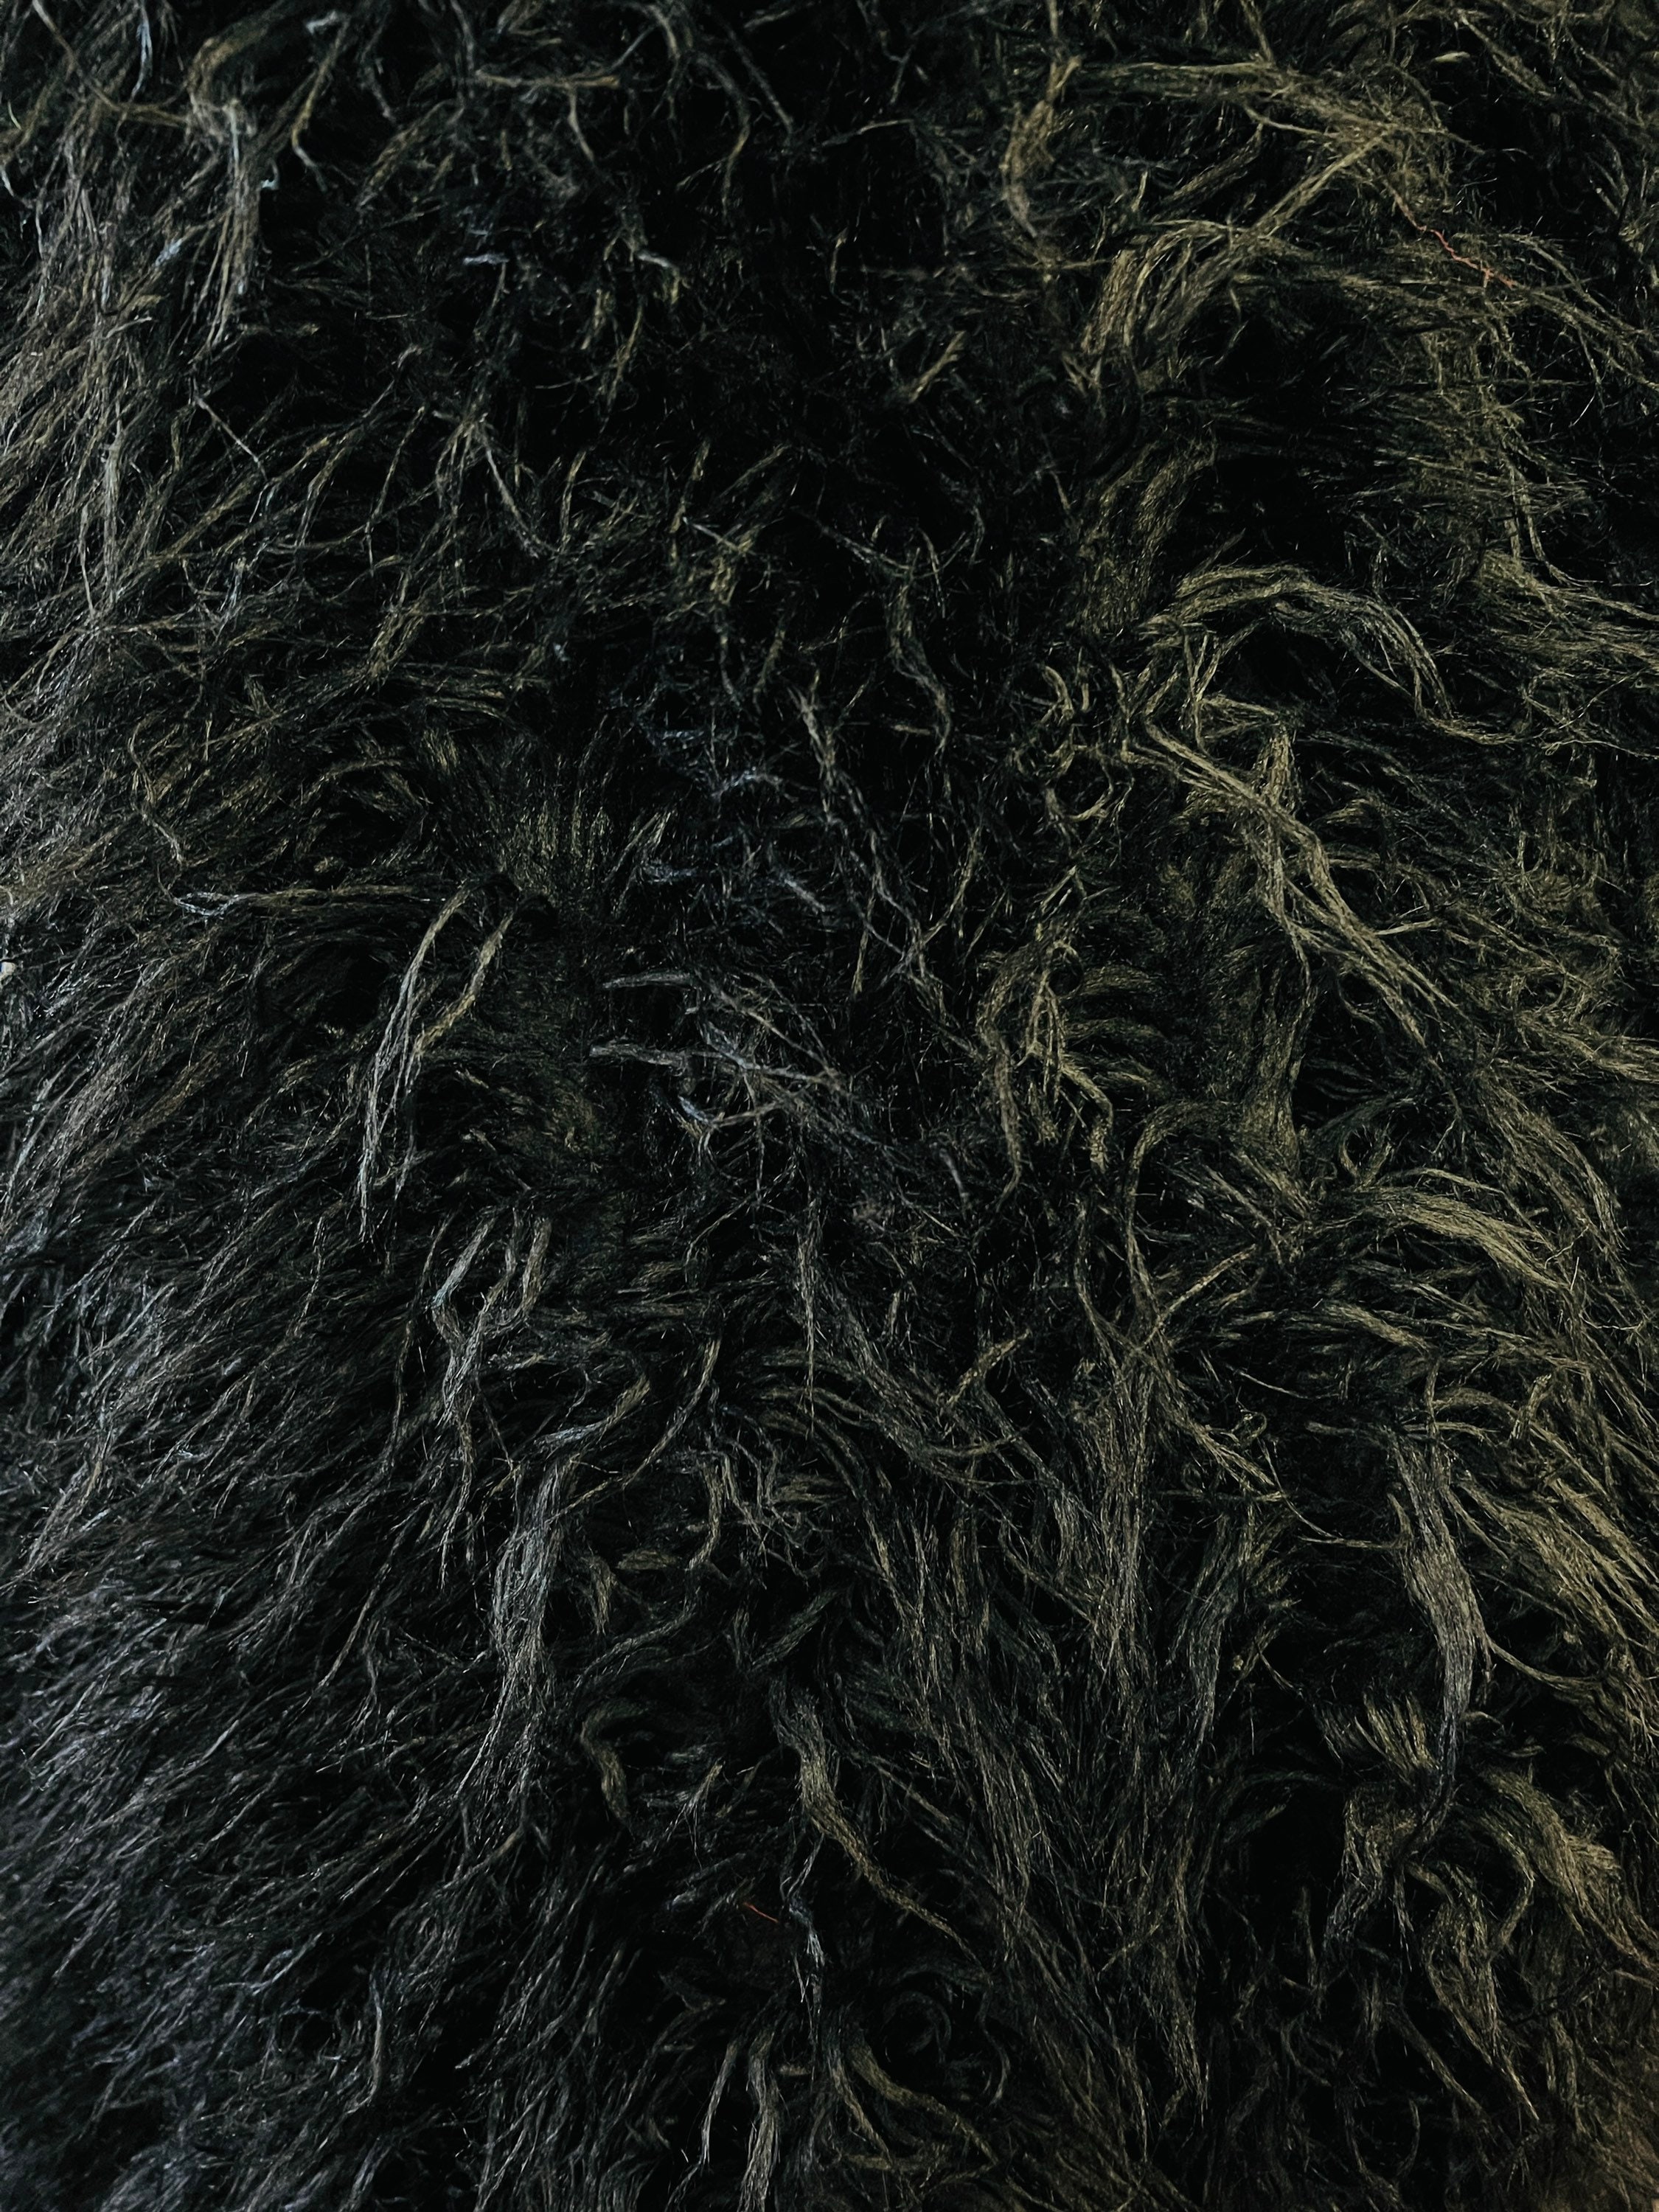 Black Curly Wool Fake Fur Fabric - China Fake Fur and Faux Fur price